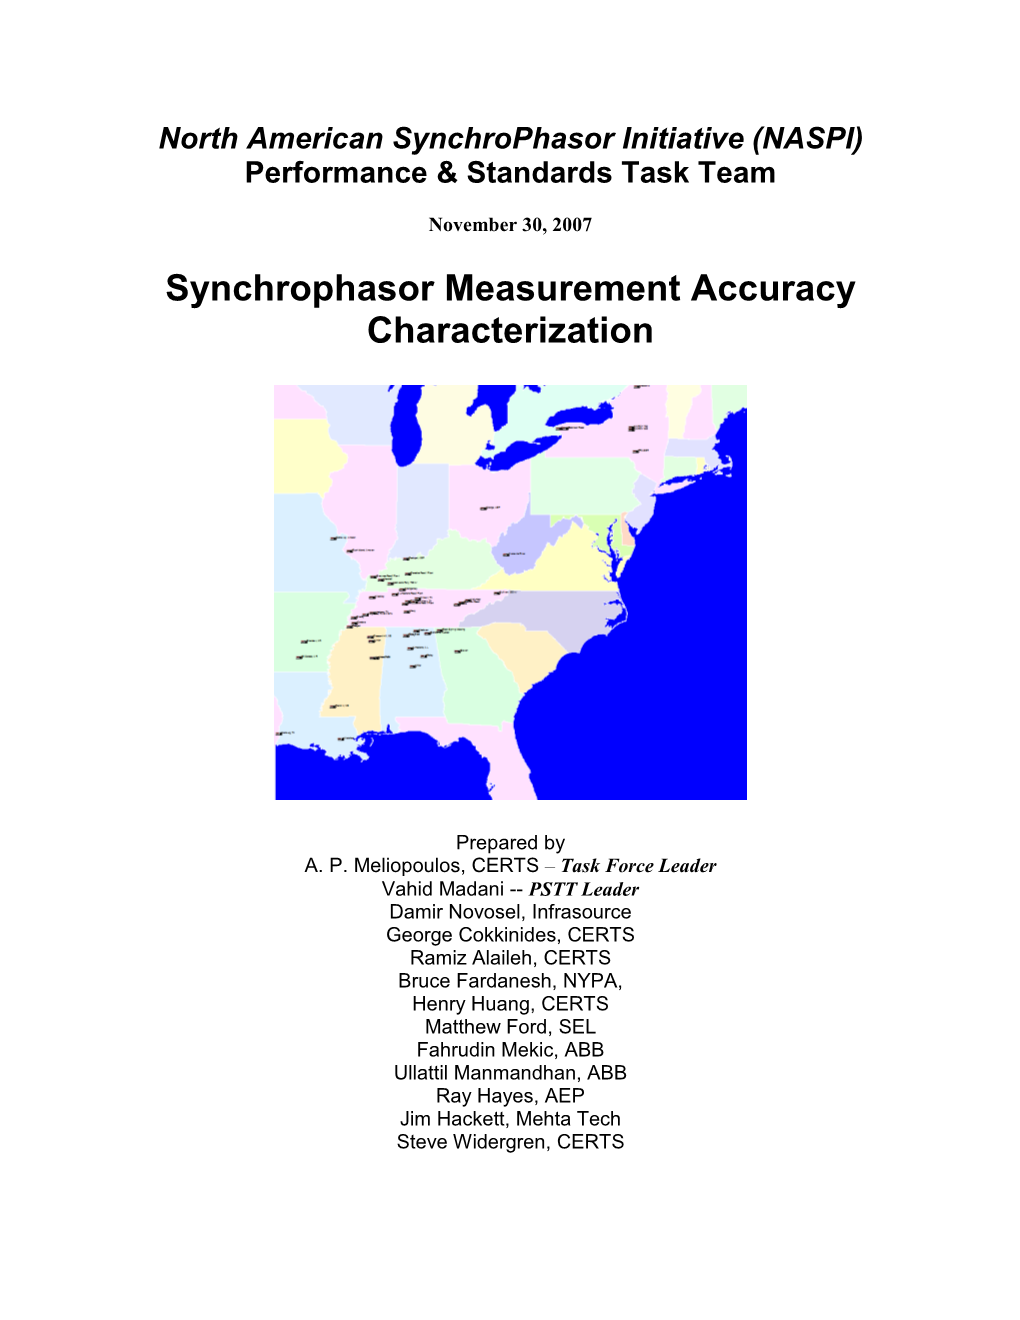 Synchrophasor Measurement Accuracy Characterization